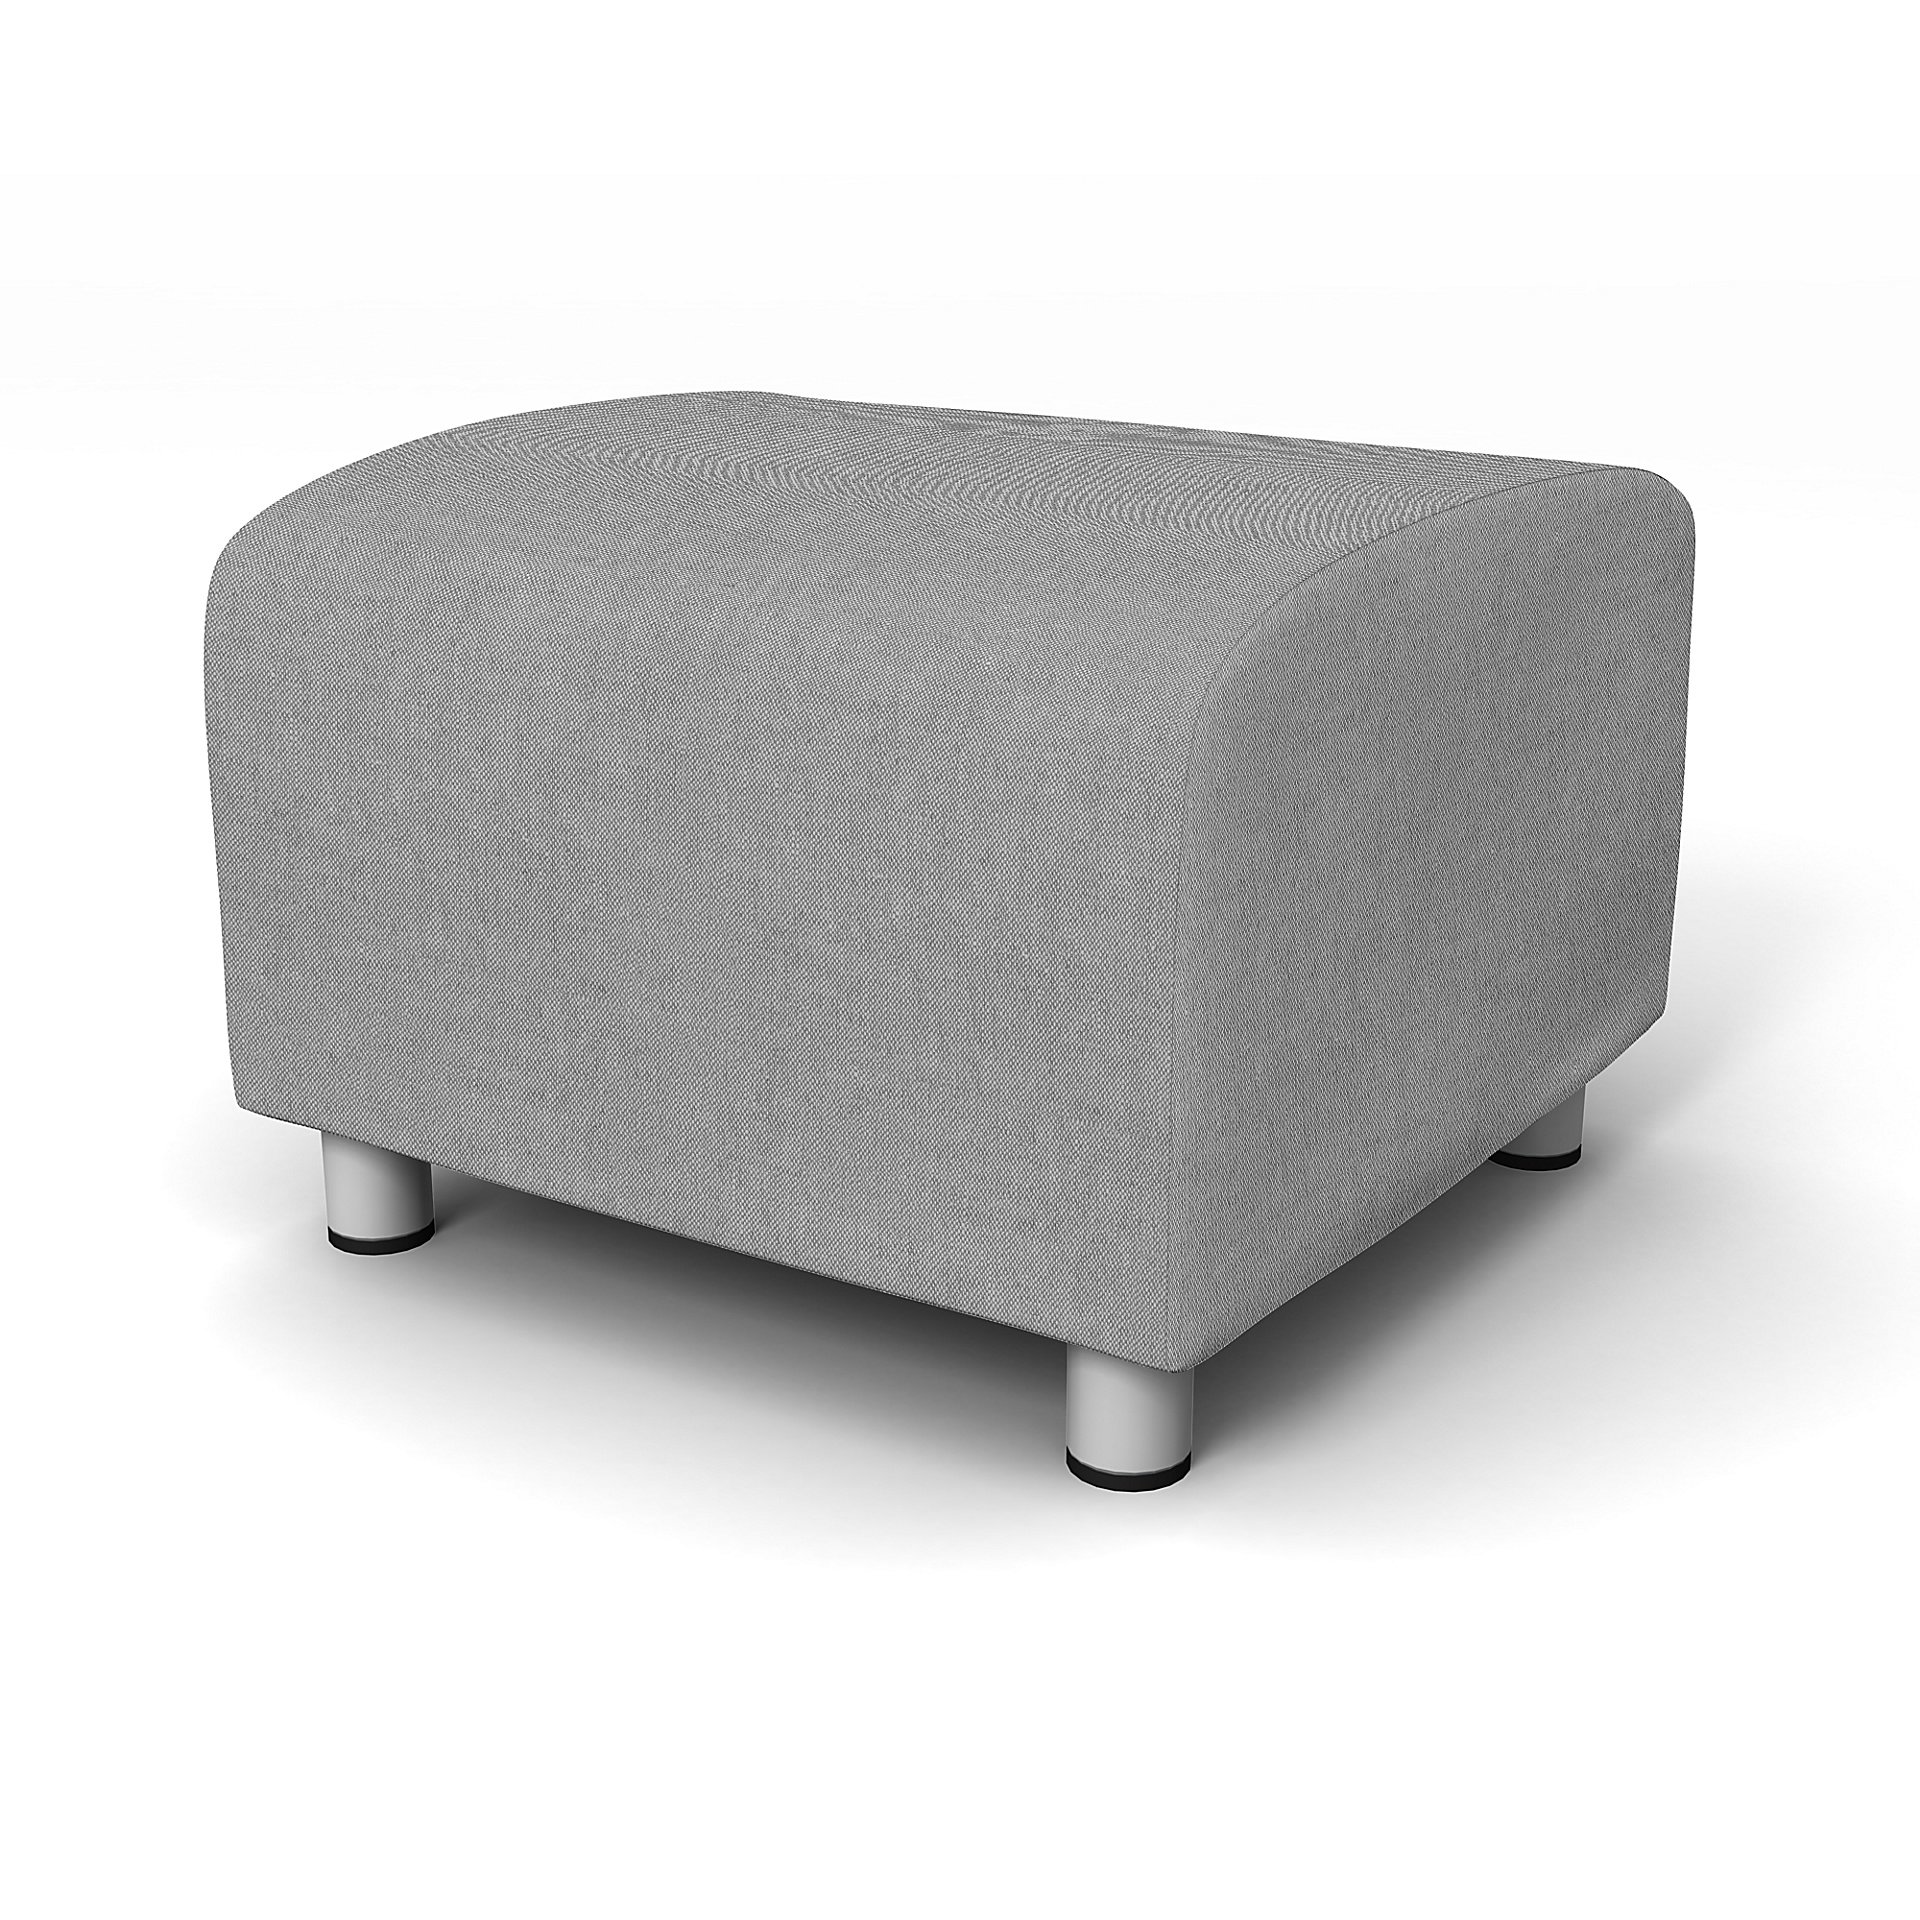 IKEA - Klippan Footstool Cover, Graphite, Linen - Bemz